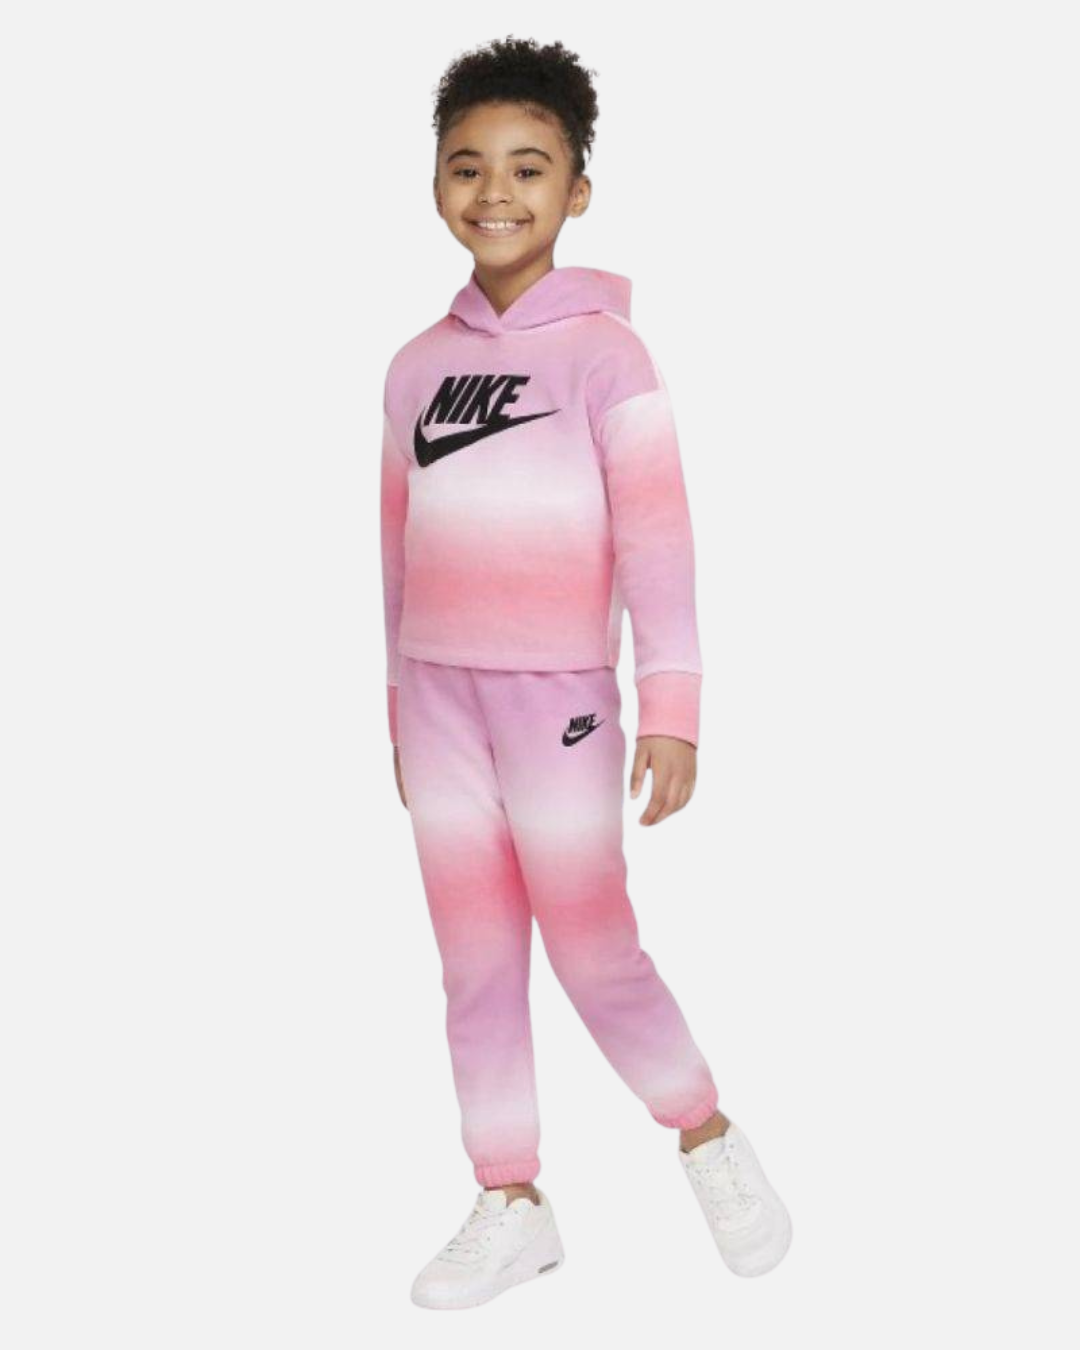 Ensemble Nike Air Enfant Fille - Noir/Blanc – Footkorner